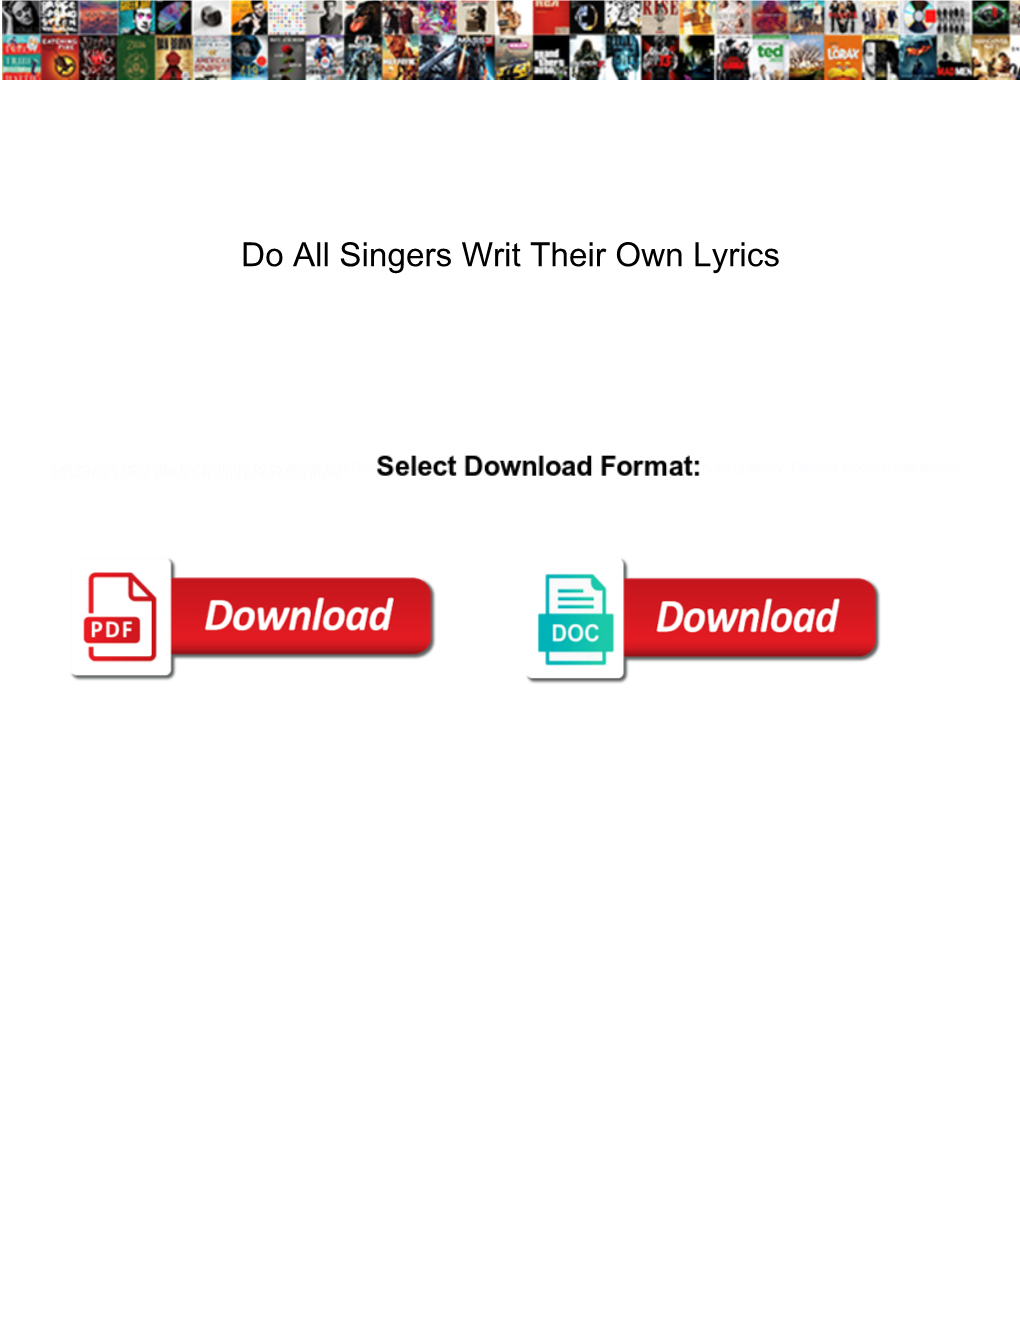 Do All Singers Writ Their Own Lyrics